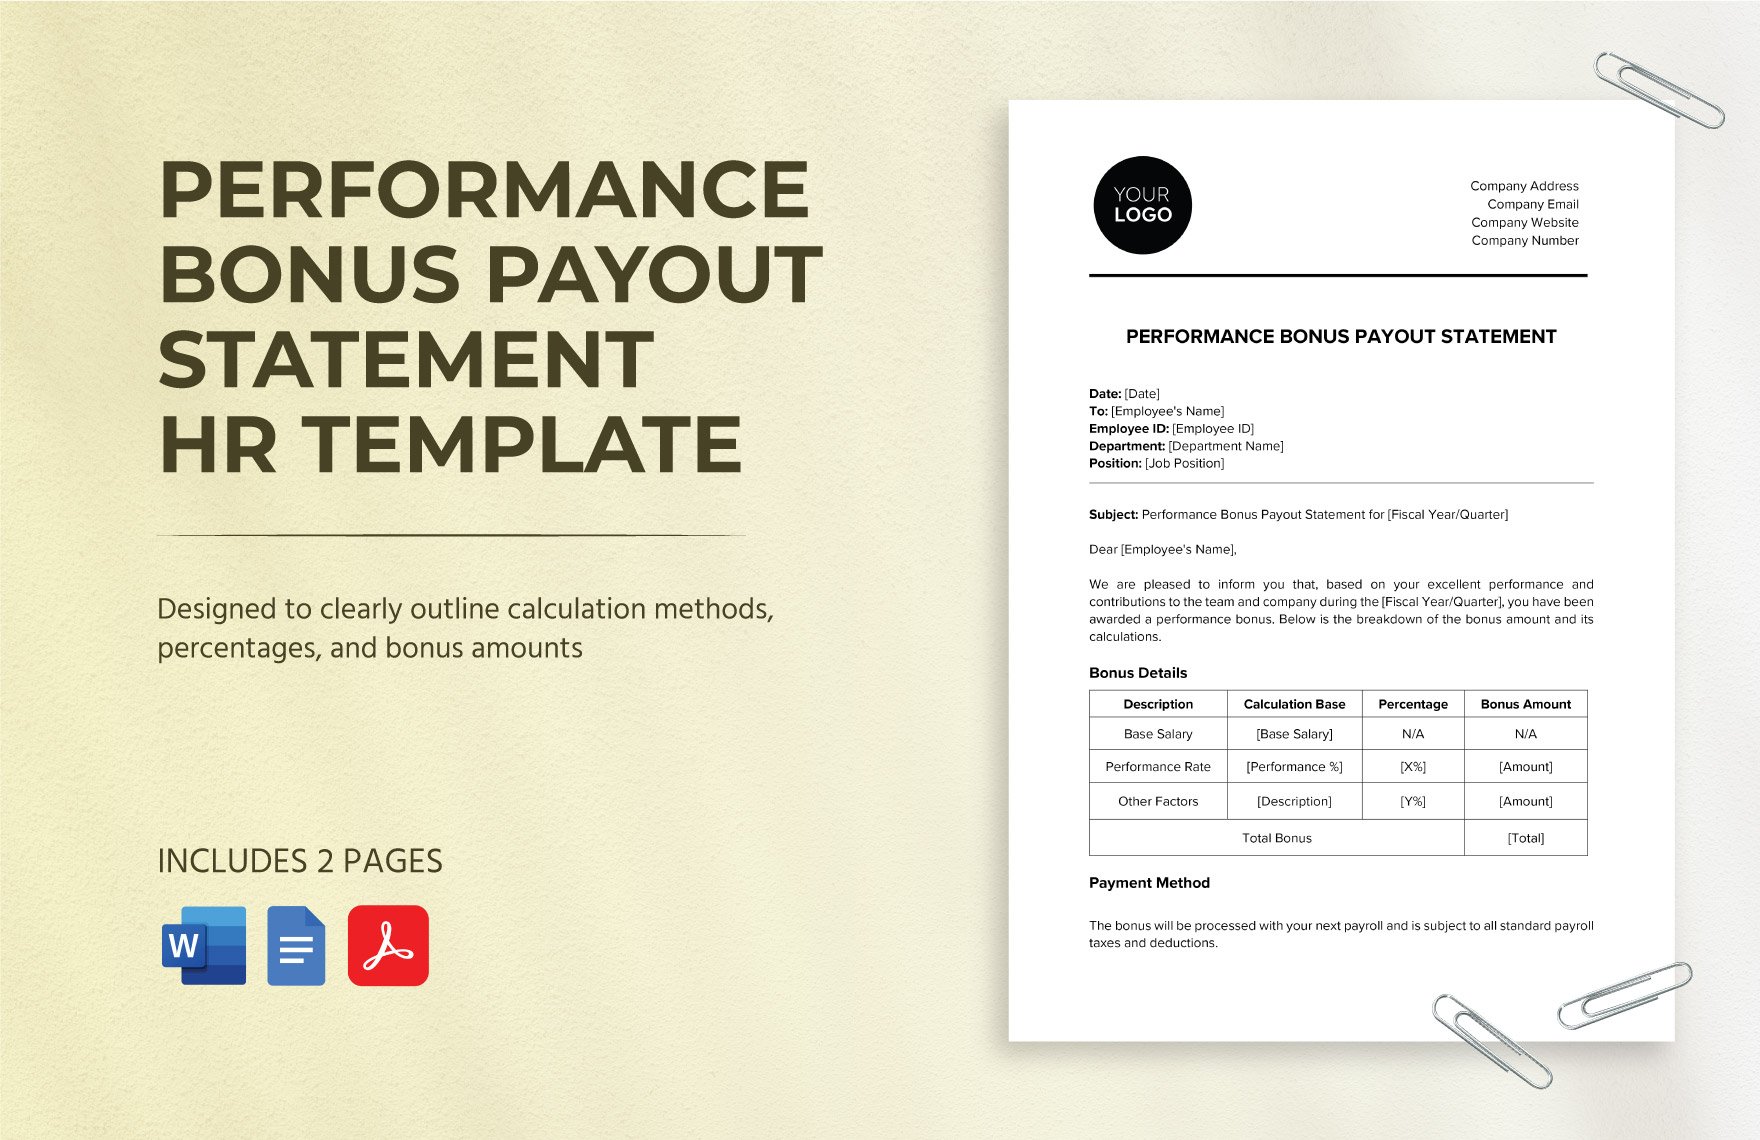 Performance Bonus Payout Statement HR Template in Word, Google Docs, PDF